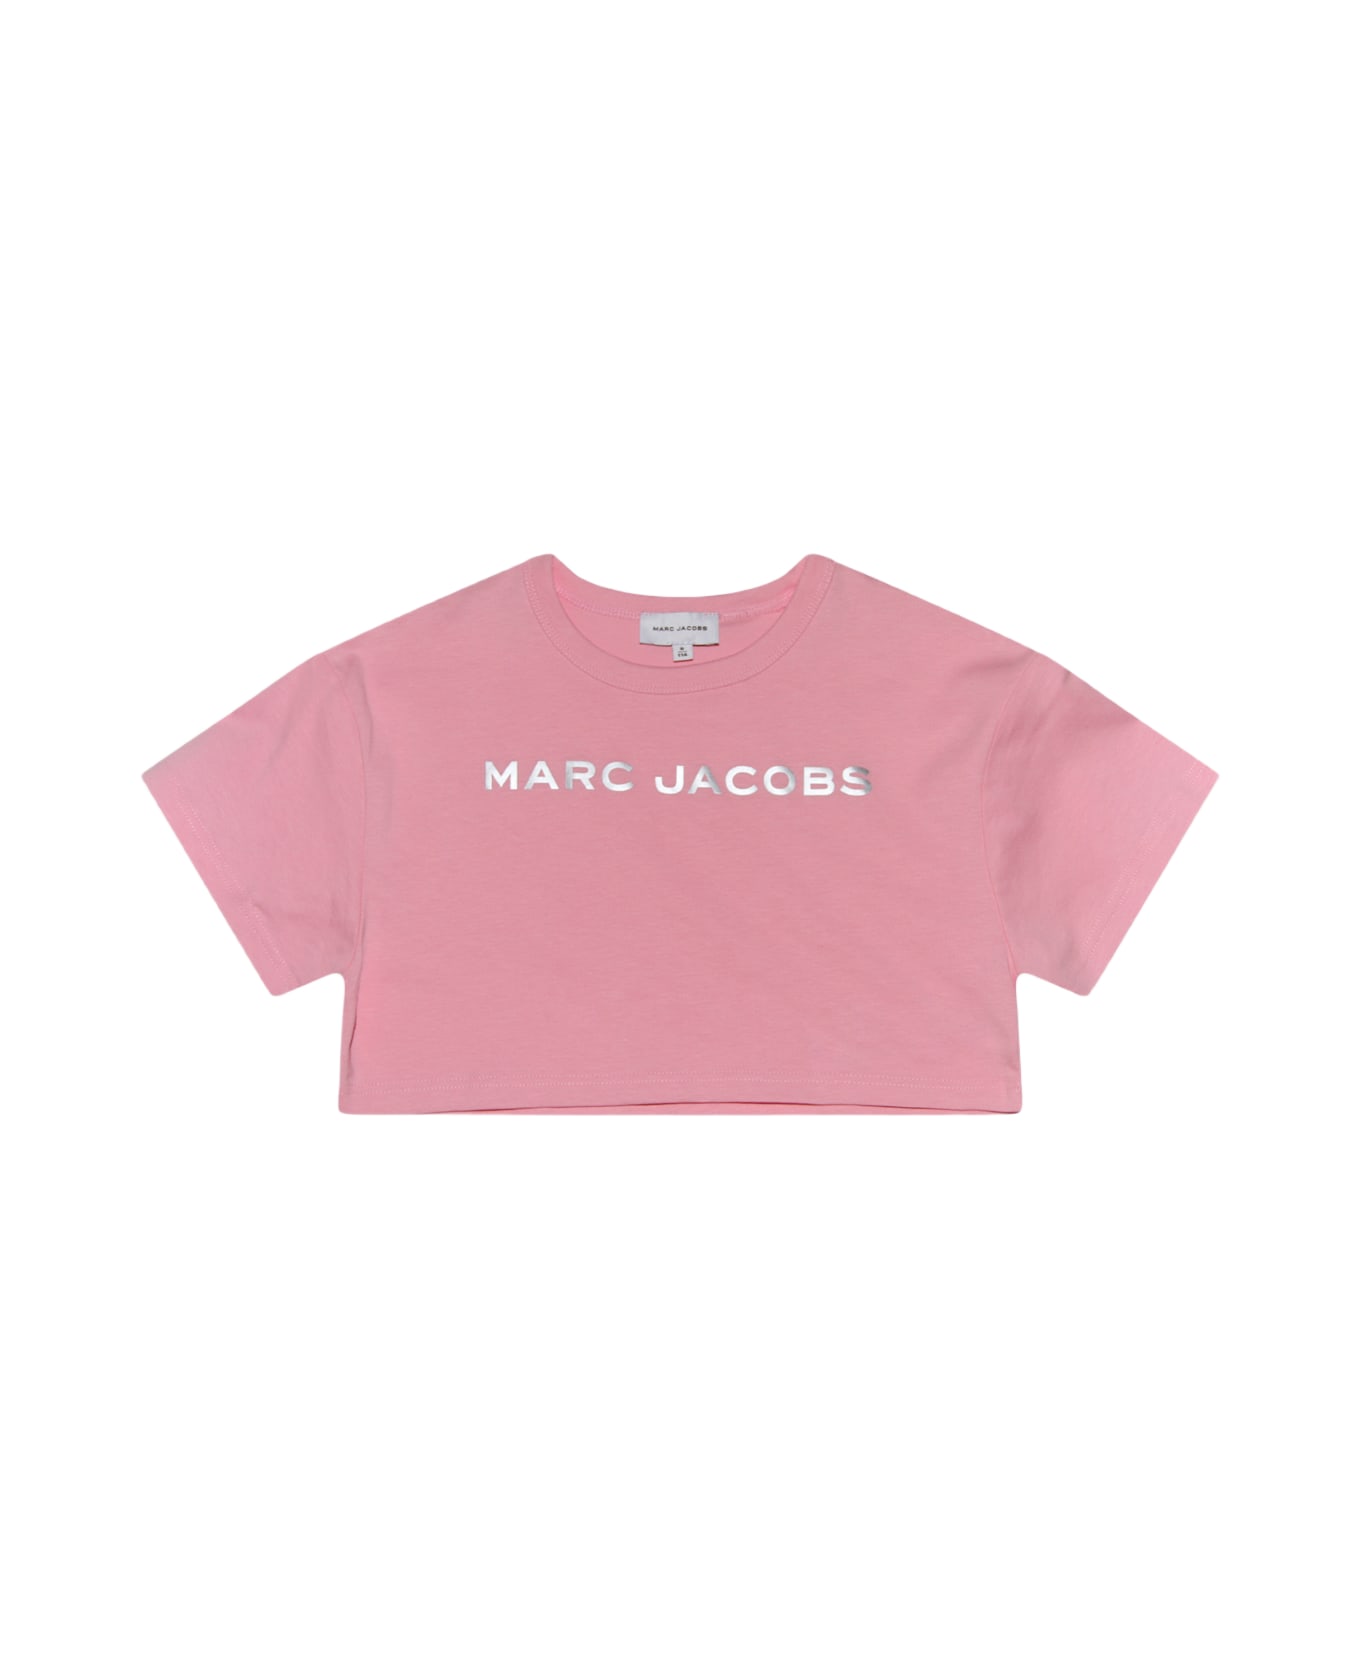 Marc Jacobs Pink Cotton T-shirt - Pink